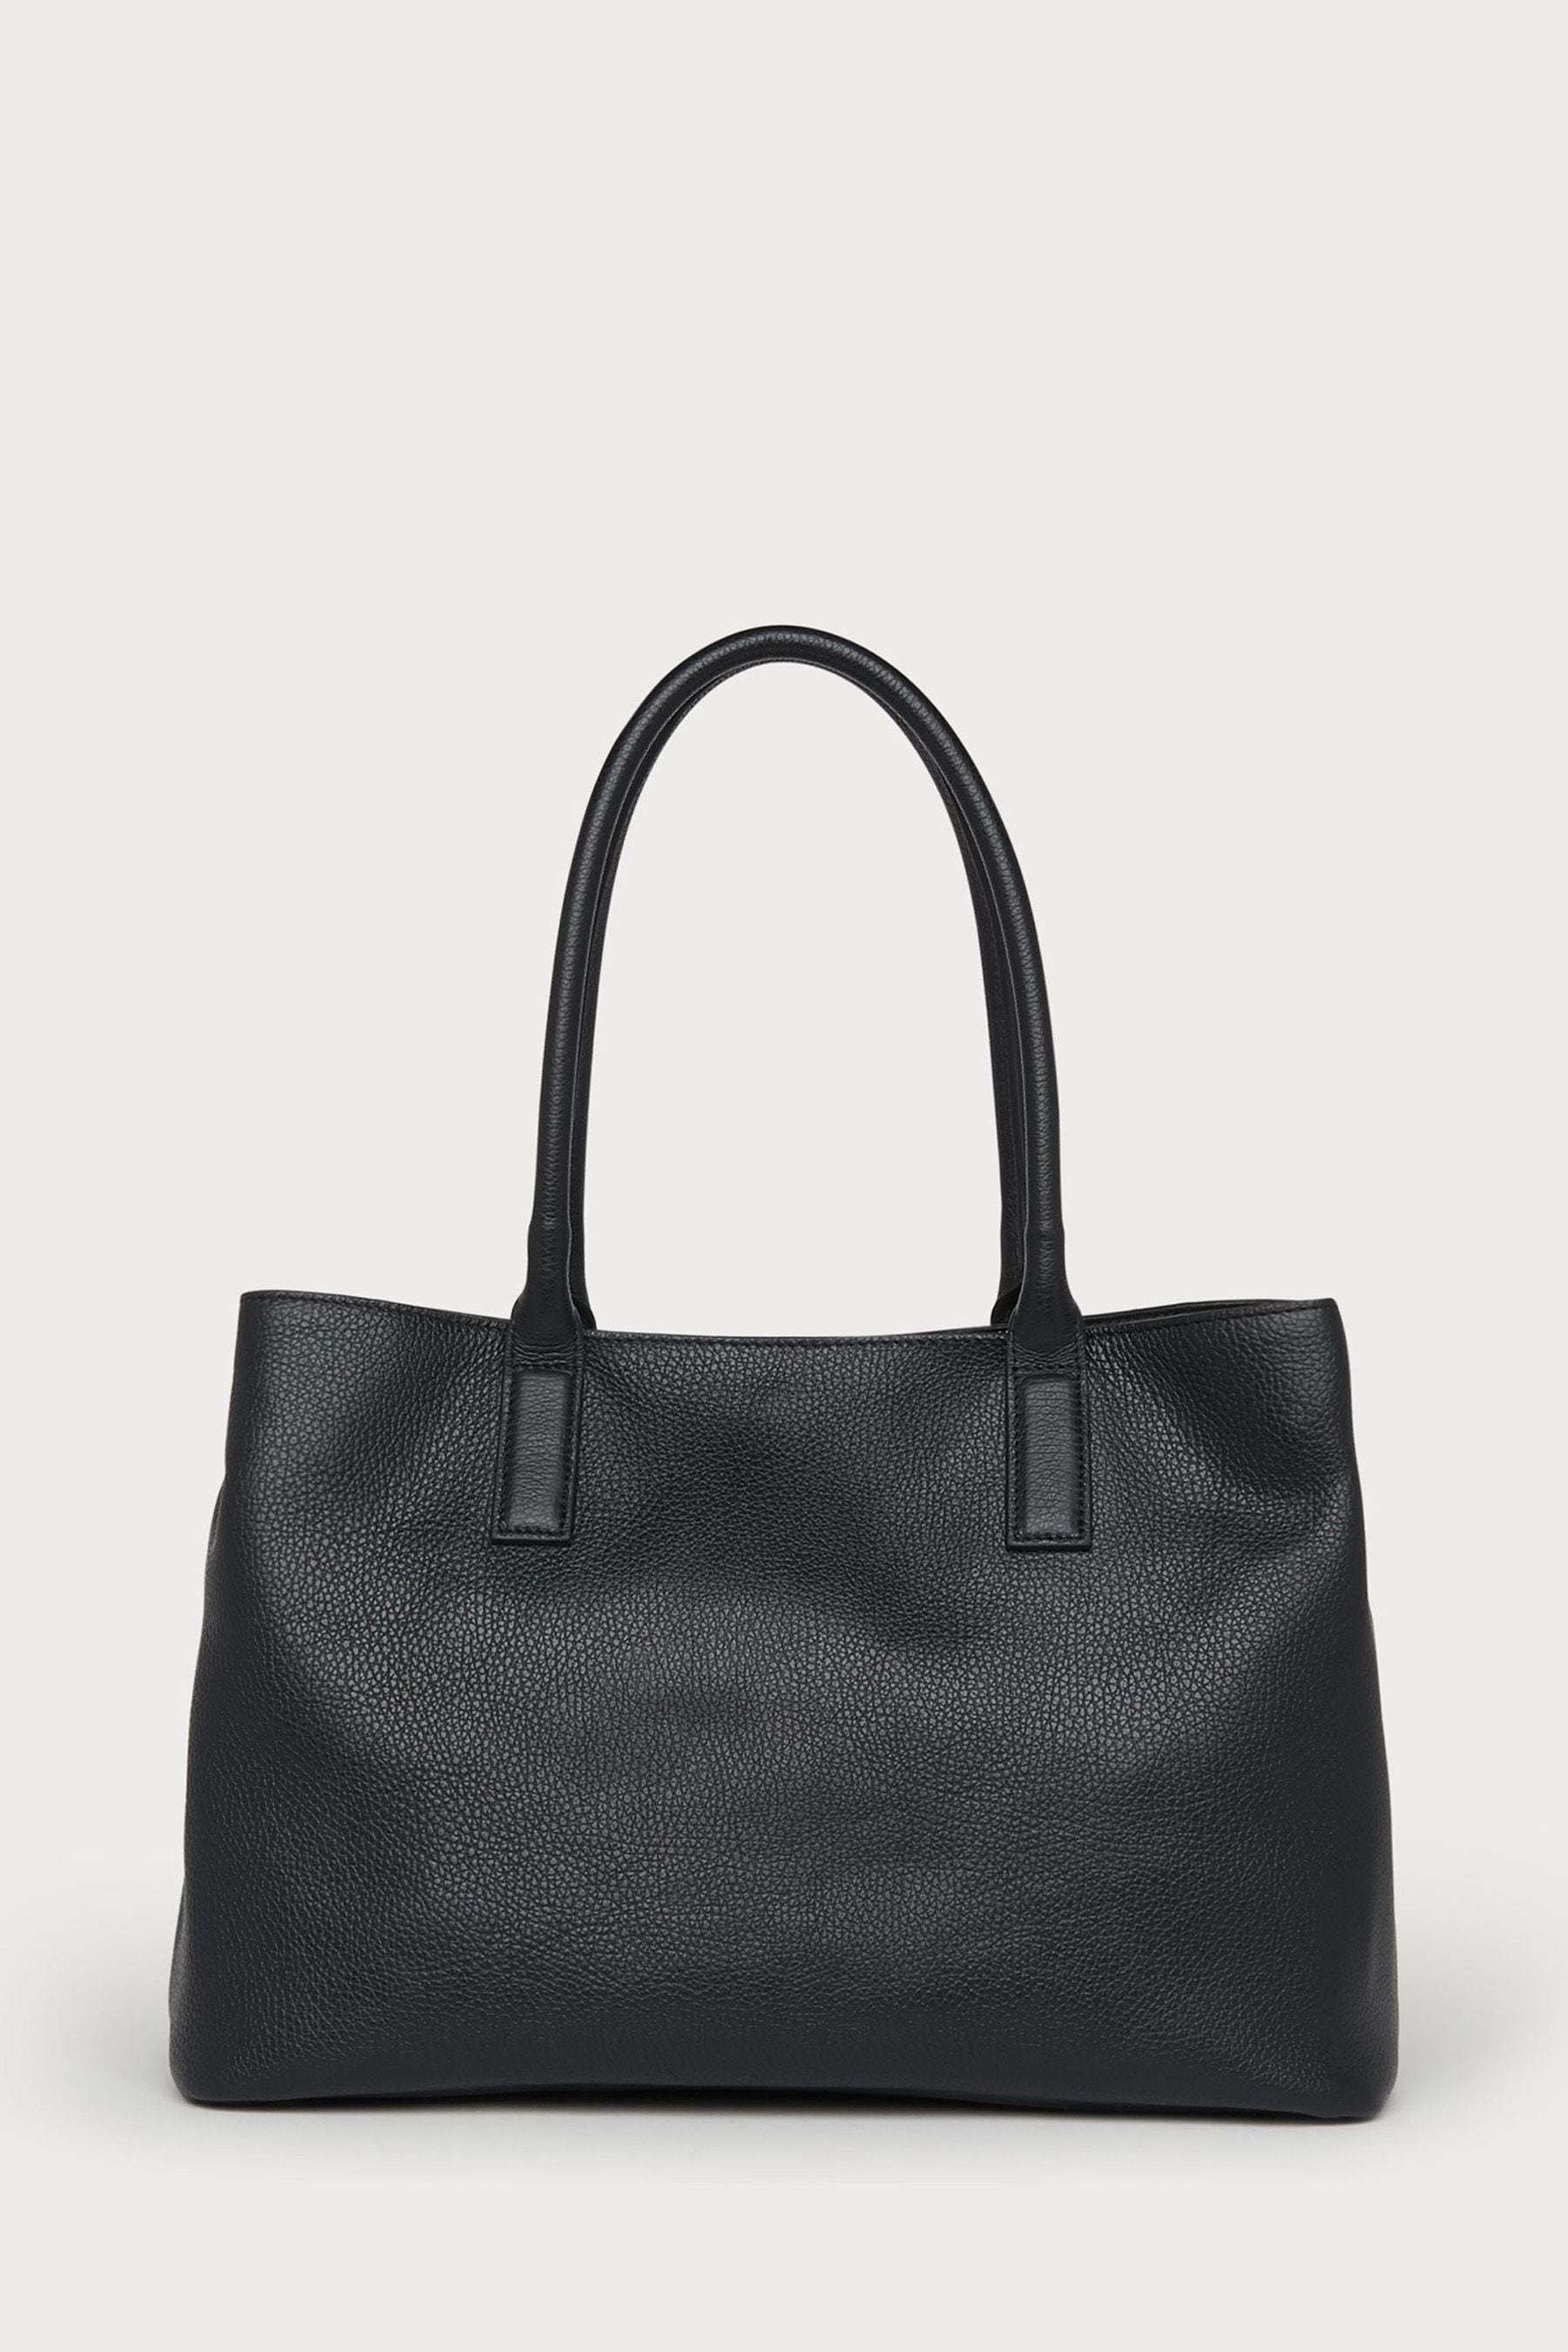 Buy LK Bennett Lillian Leather Tote Bag from the Next UK online shop